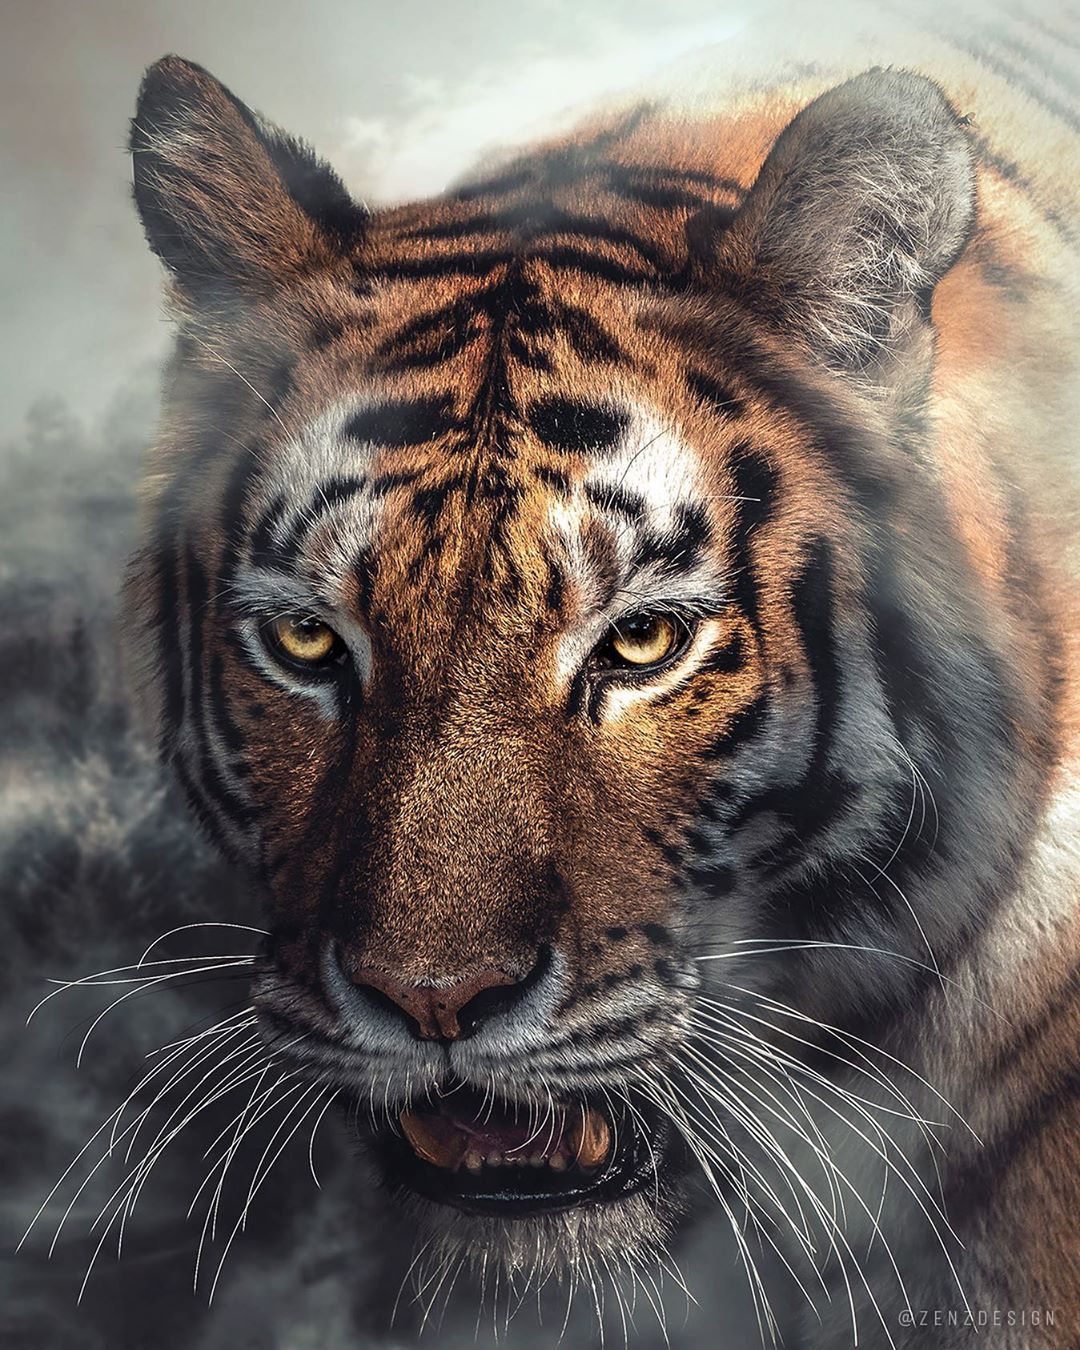 Фото Тигр в дымке, by zenzdesign